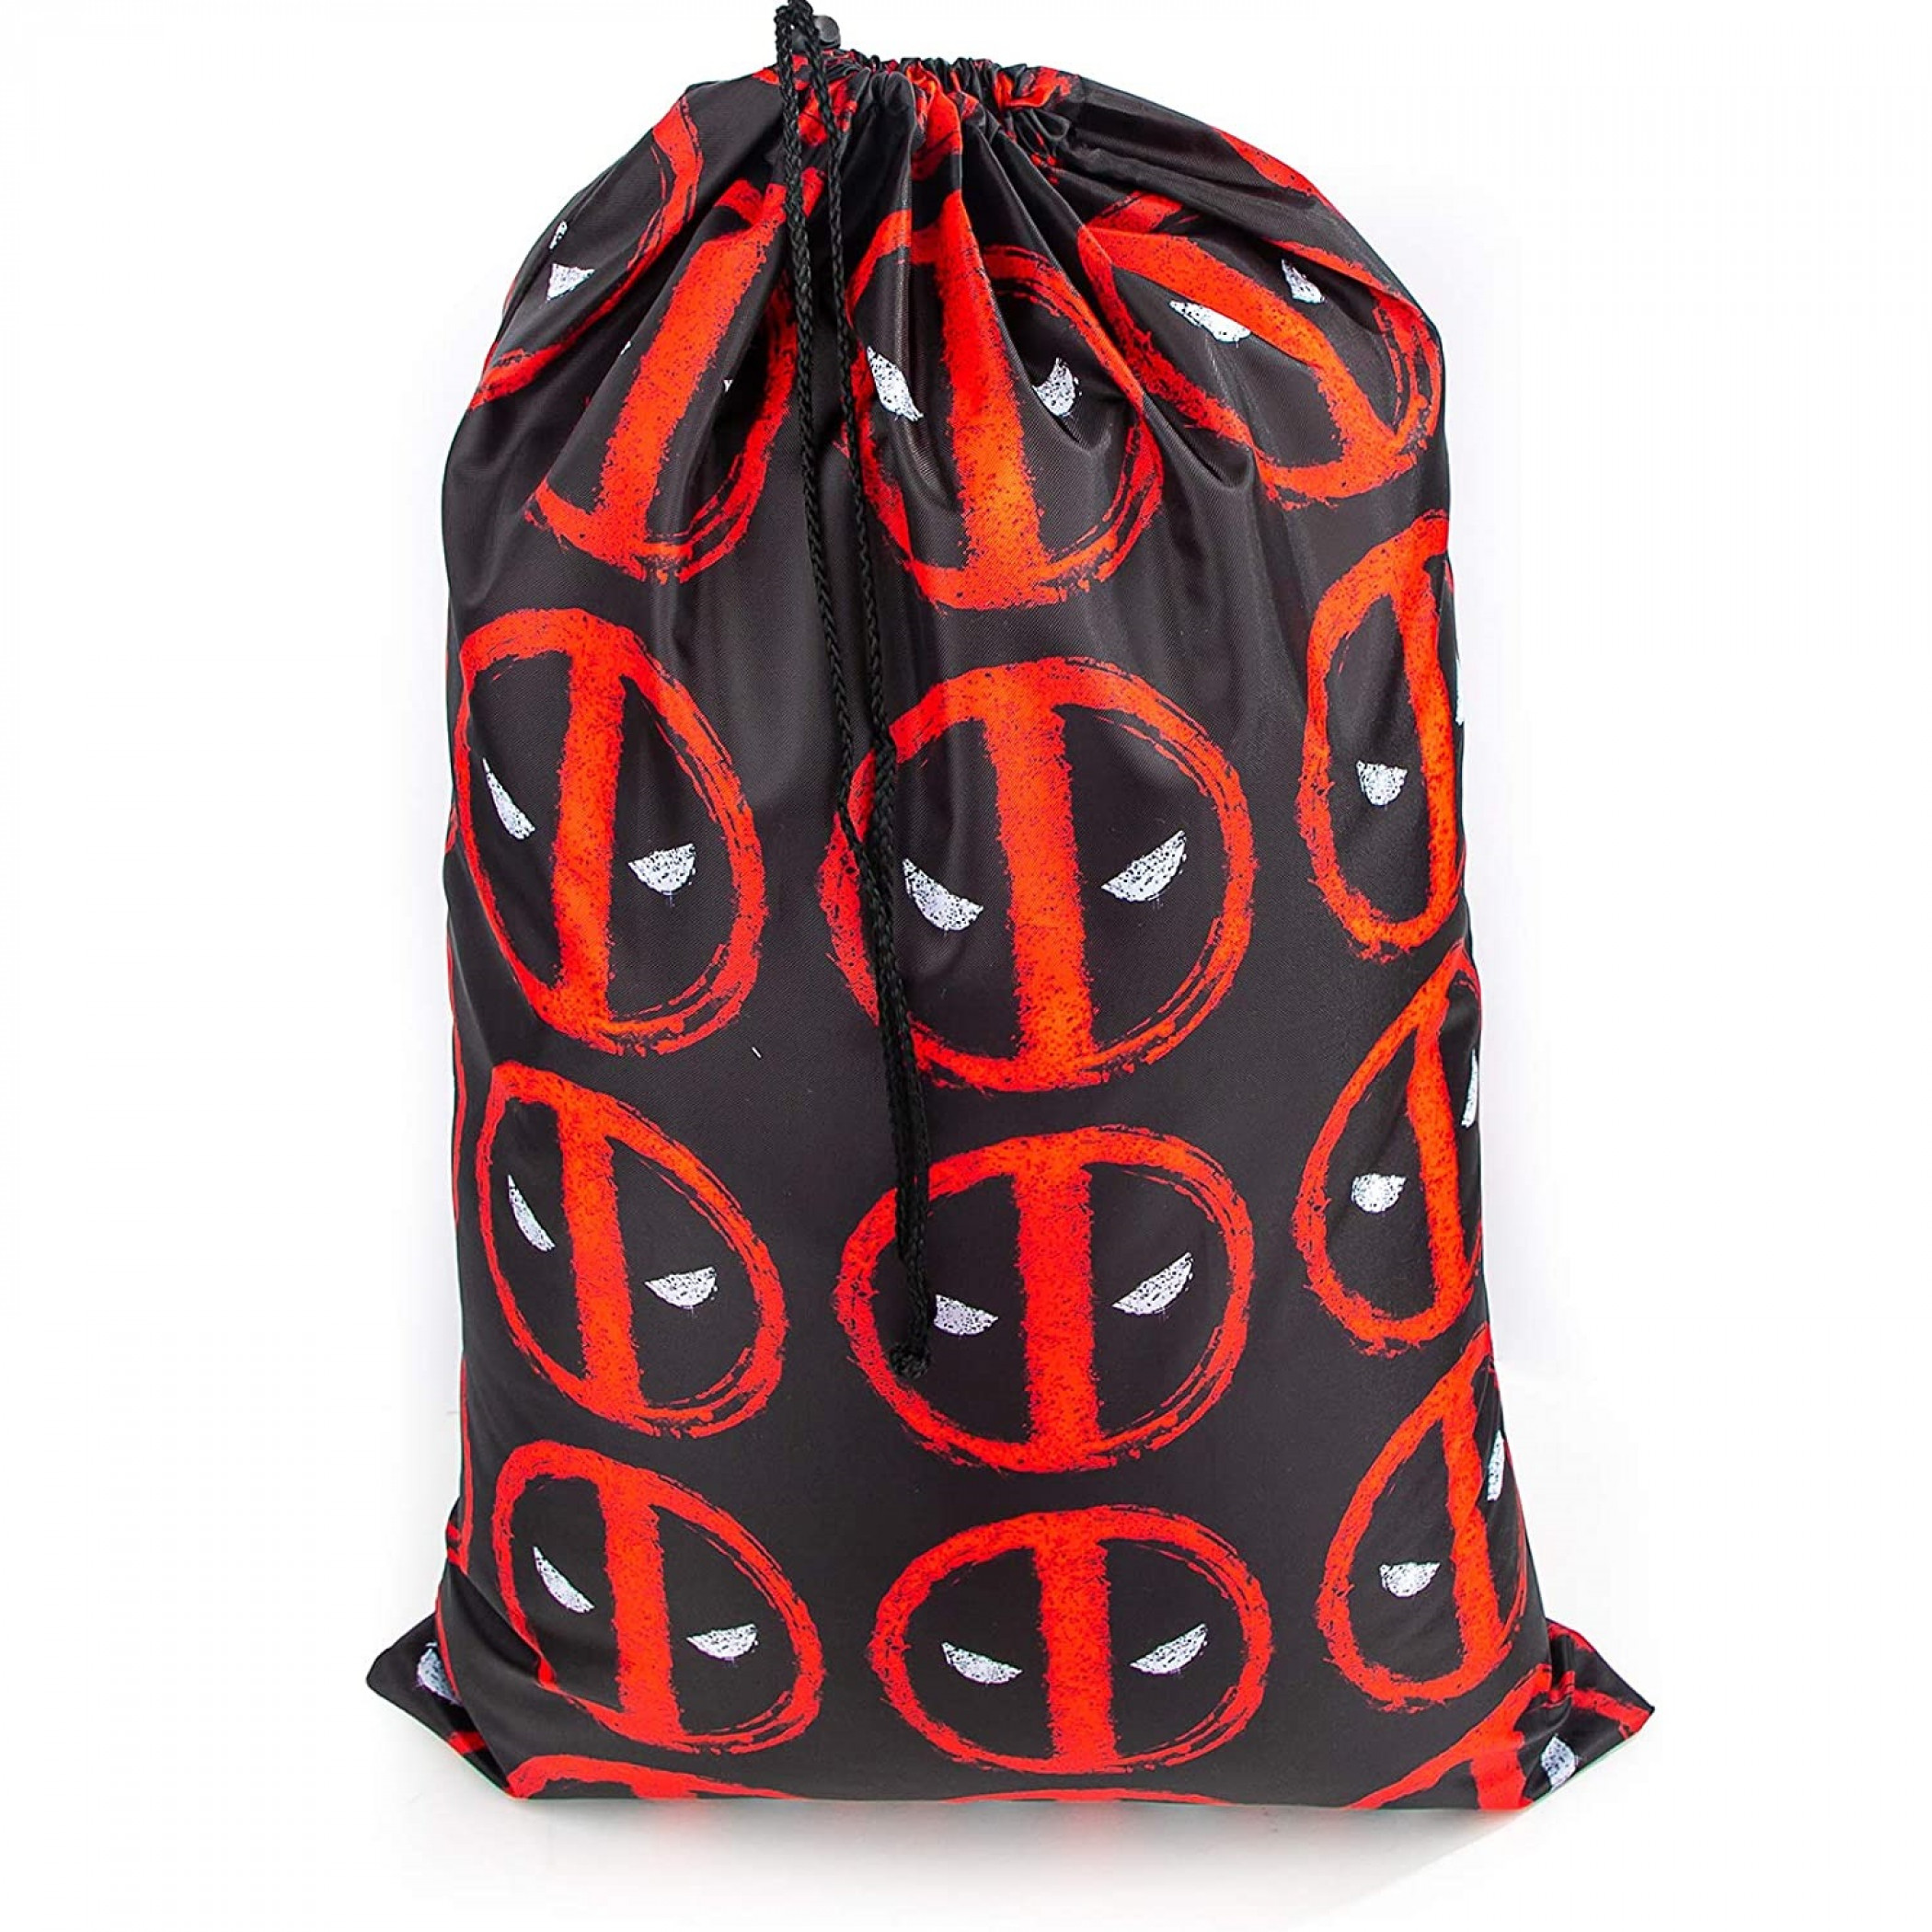 Deadpool Face Symbols Drawsting Laundry Bag